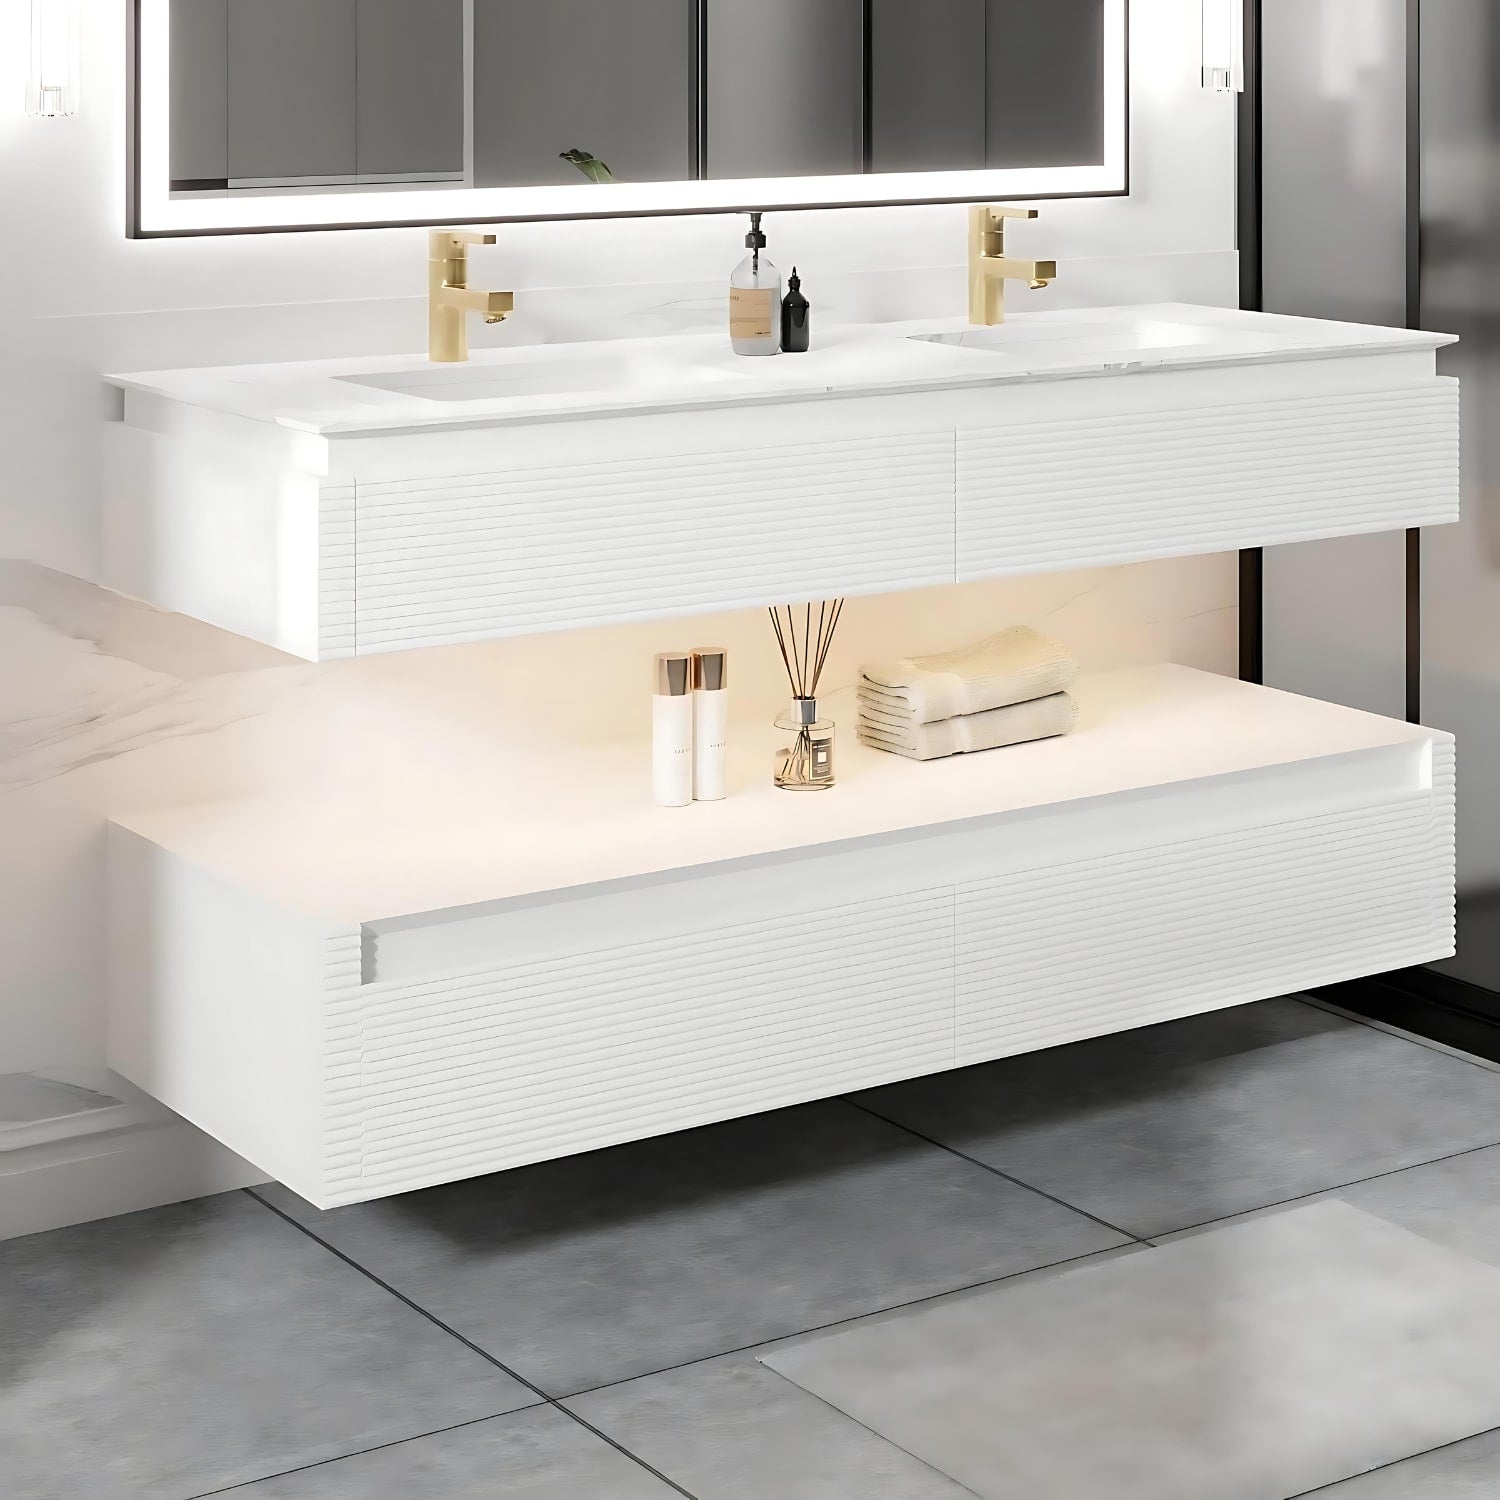 The highest quality luxury floating bathroom vanity on the market